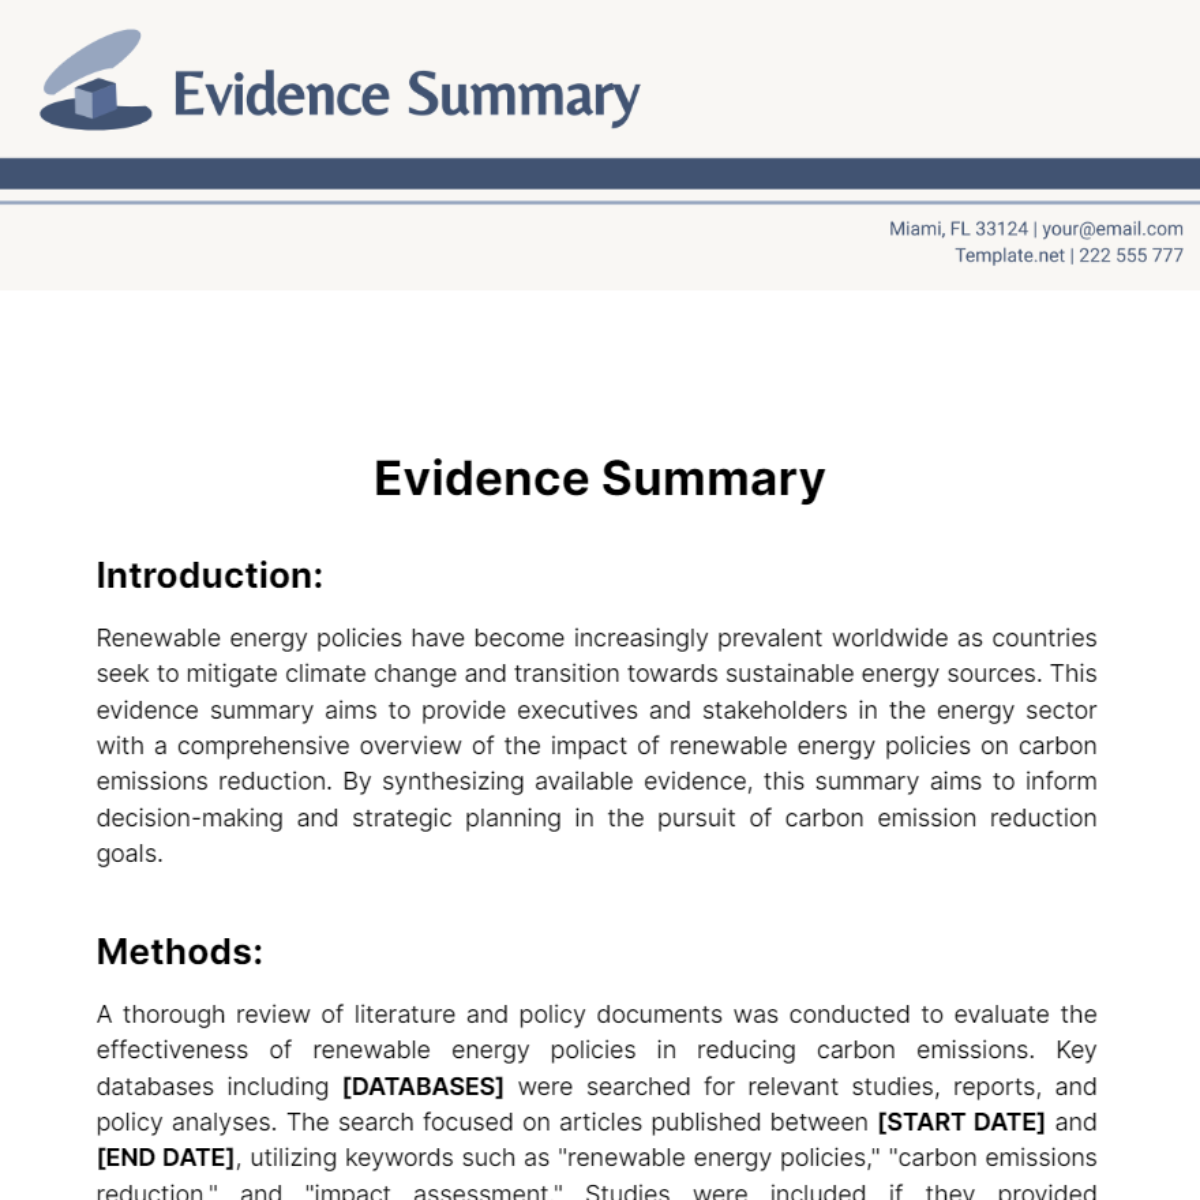 Free Evidence Summary Template